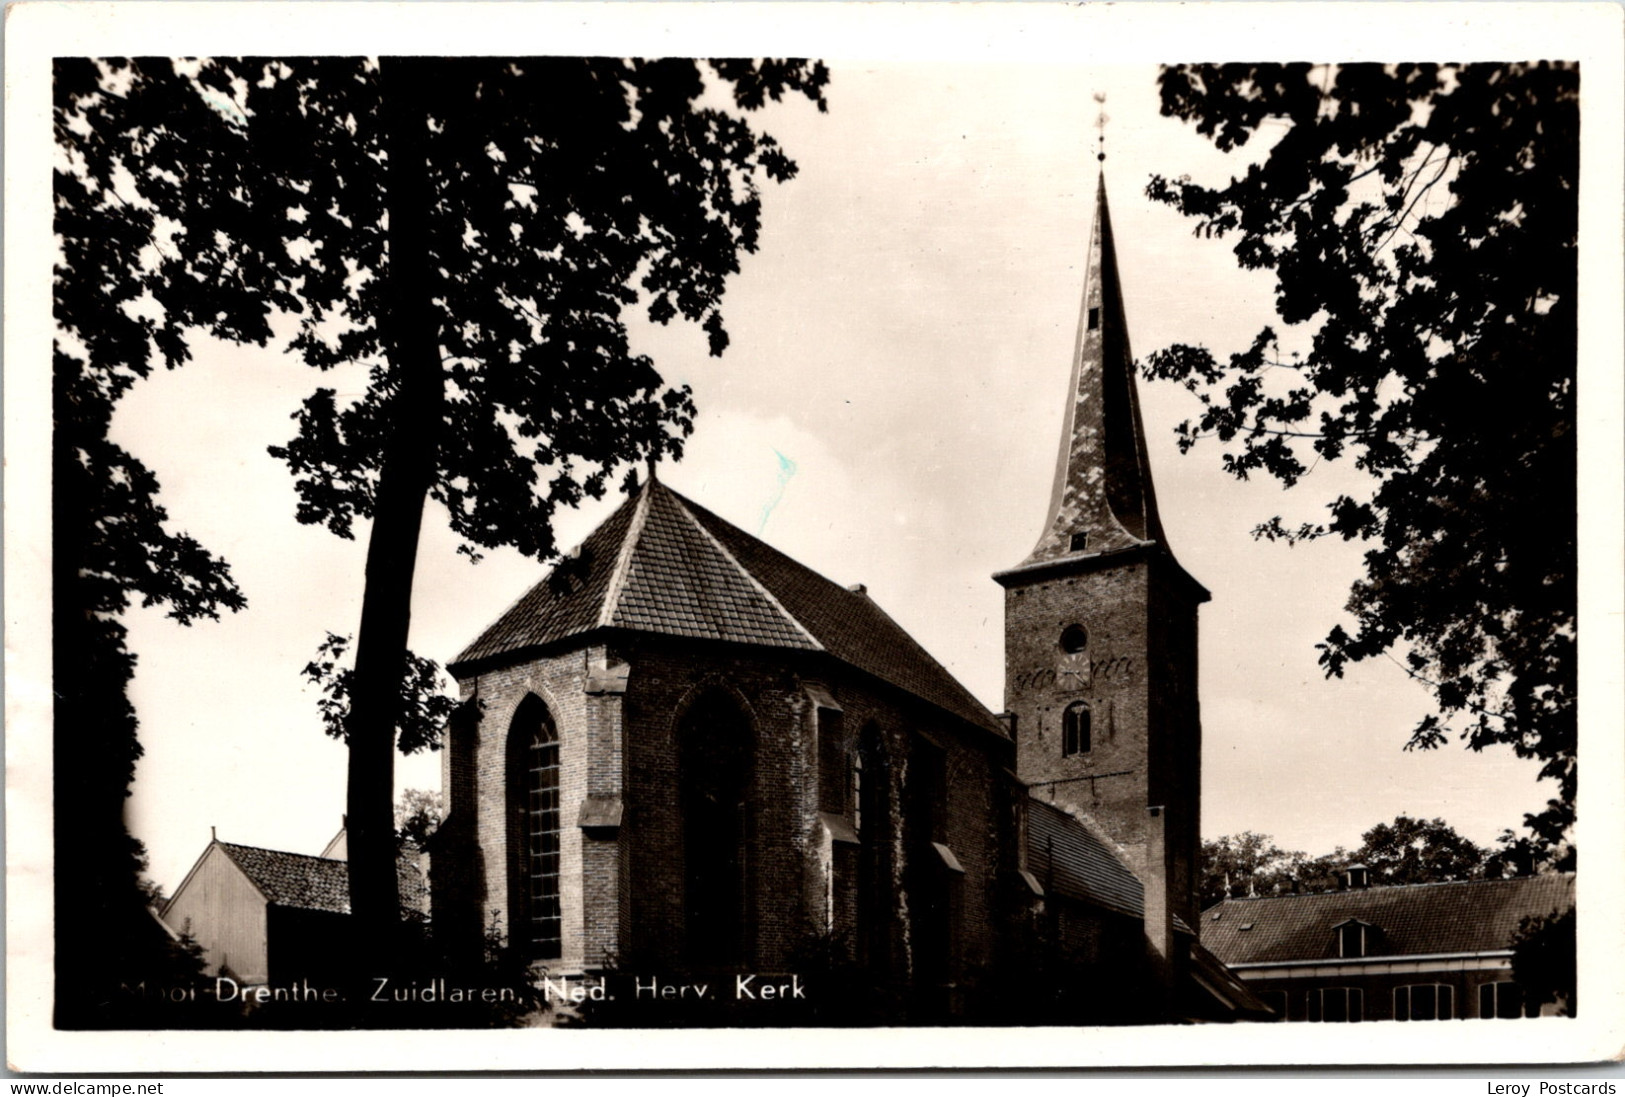 #3697 - Zuidlaren, Mooi Drenthe, Ned. Herv. Kerk 1956 (DR) - Zuidlaren